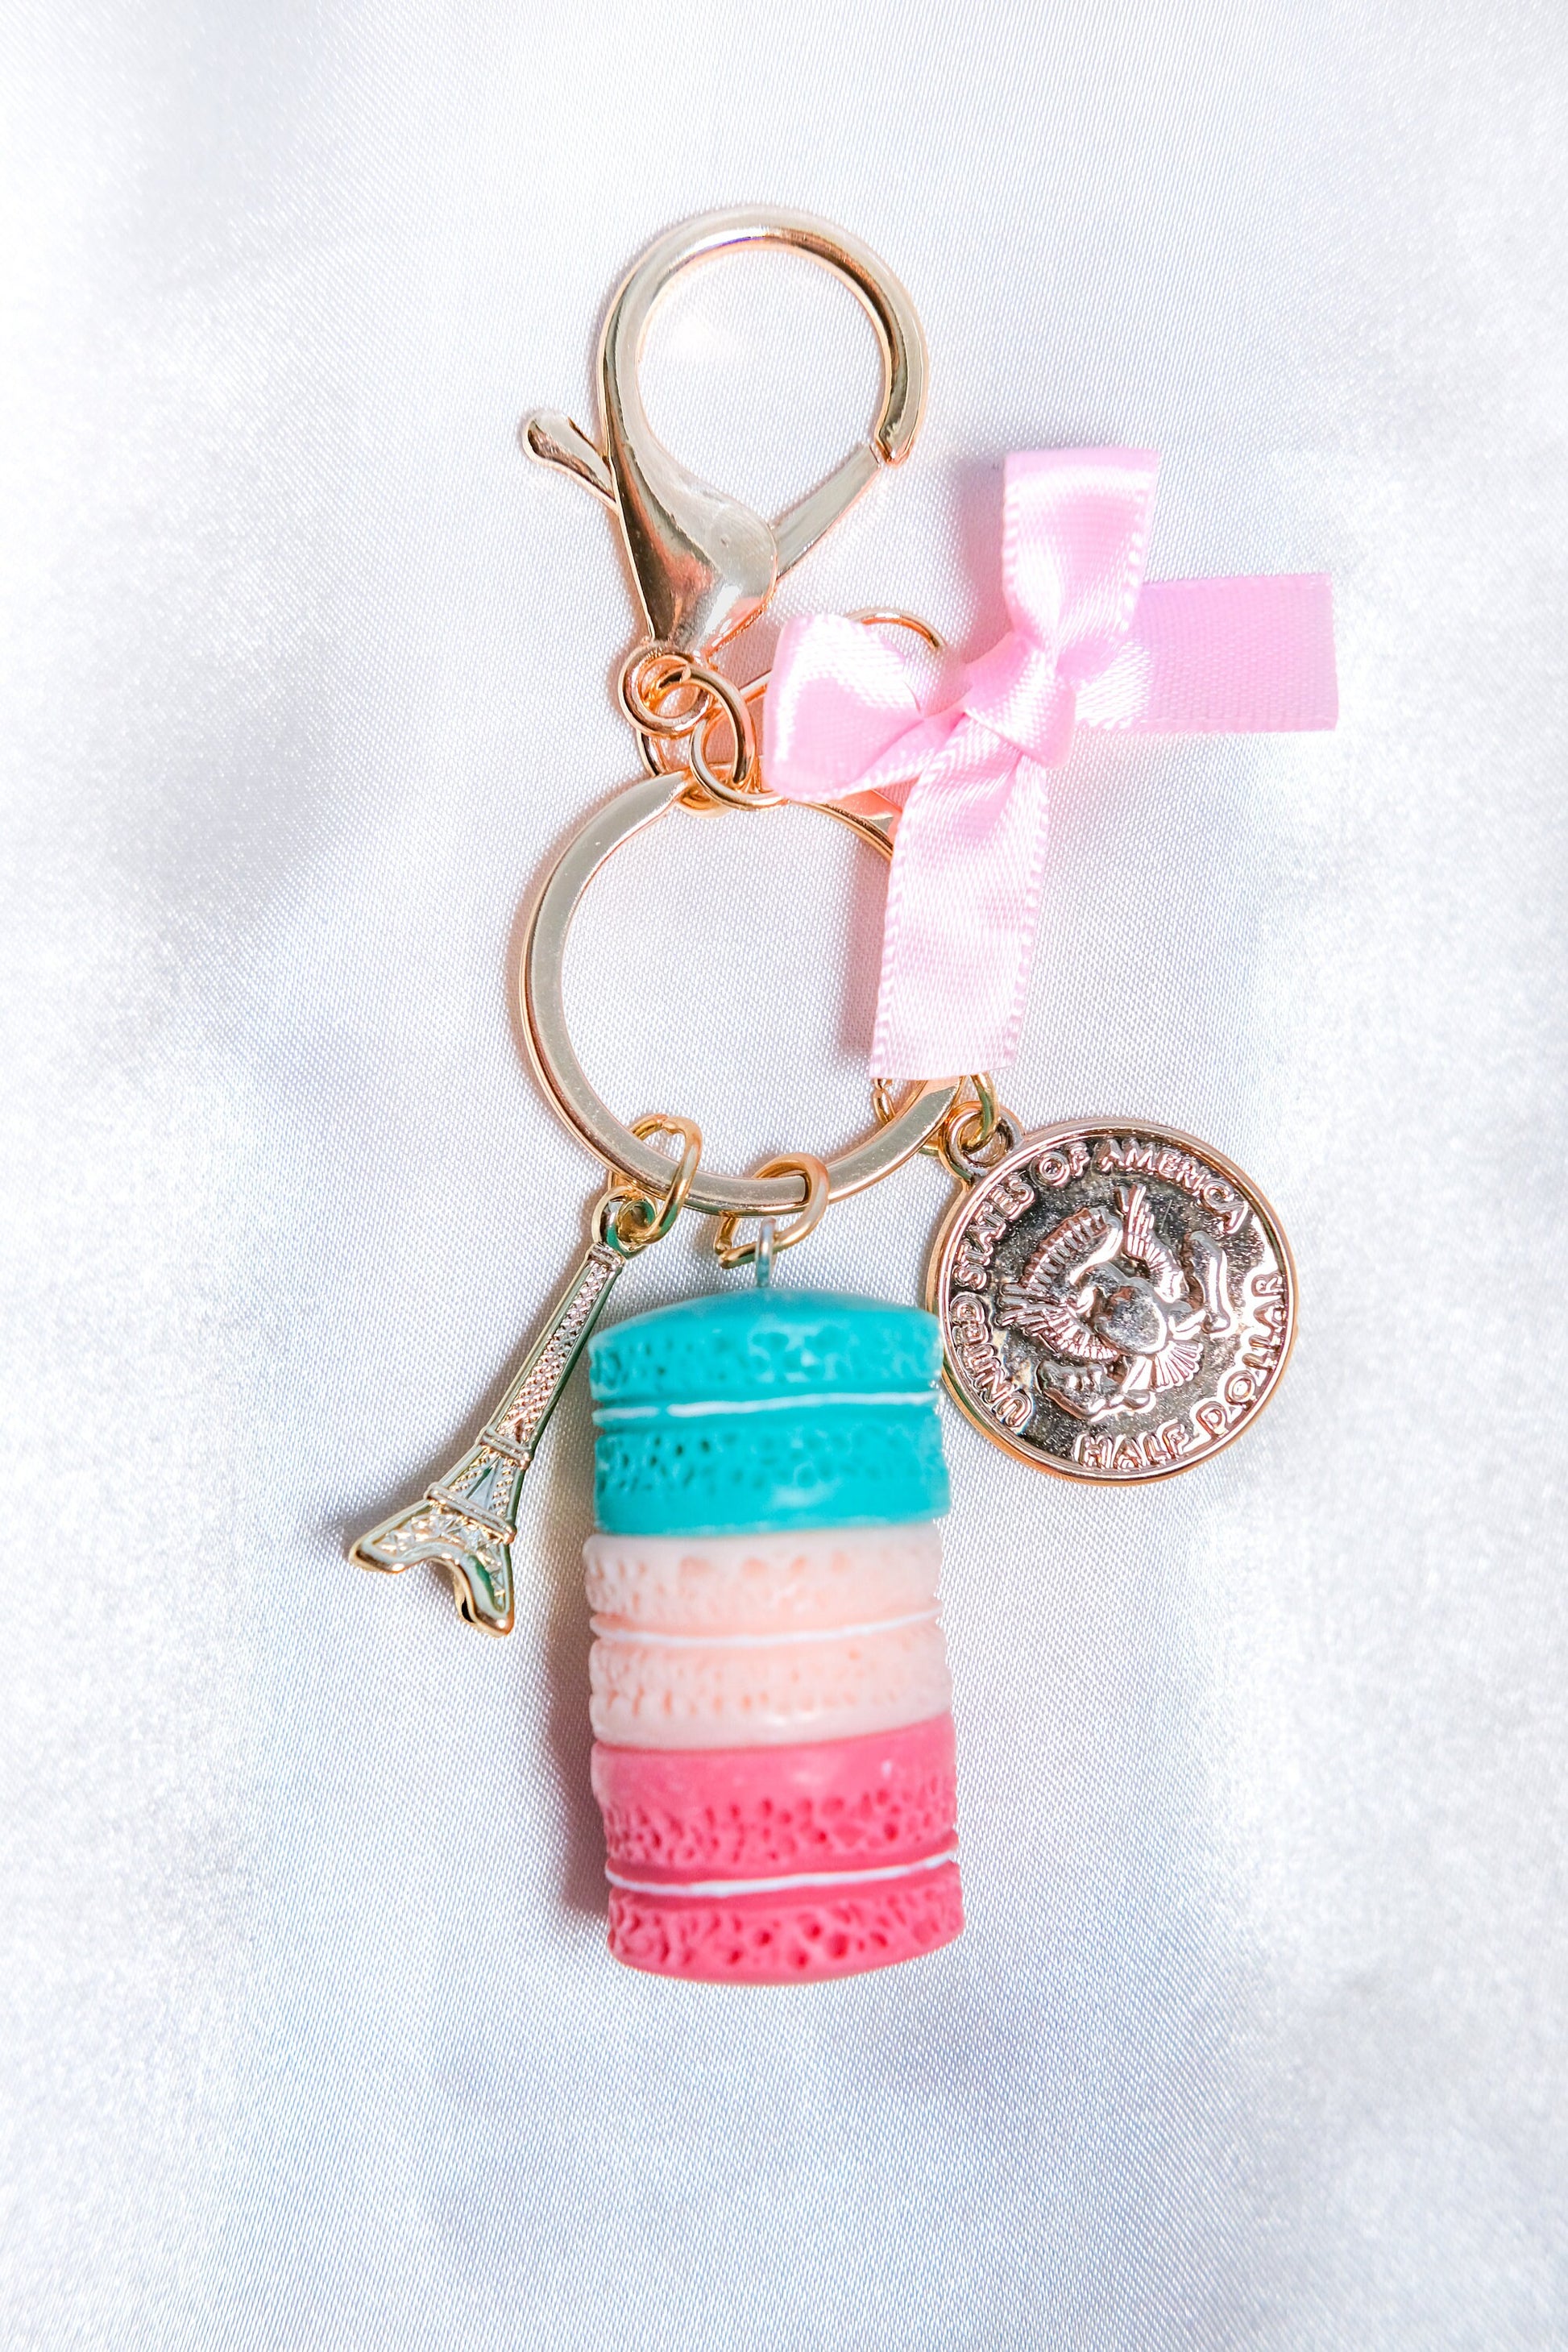 Handbag for Macarons Key Chain Effiel Tower Bag Charms Keychain Christmas  for Her/Him Packing Bag Candy bag on OnBuy